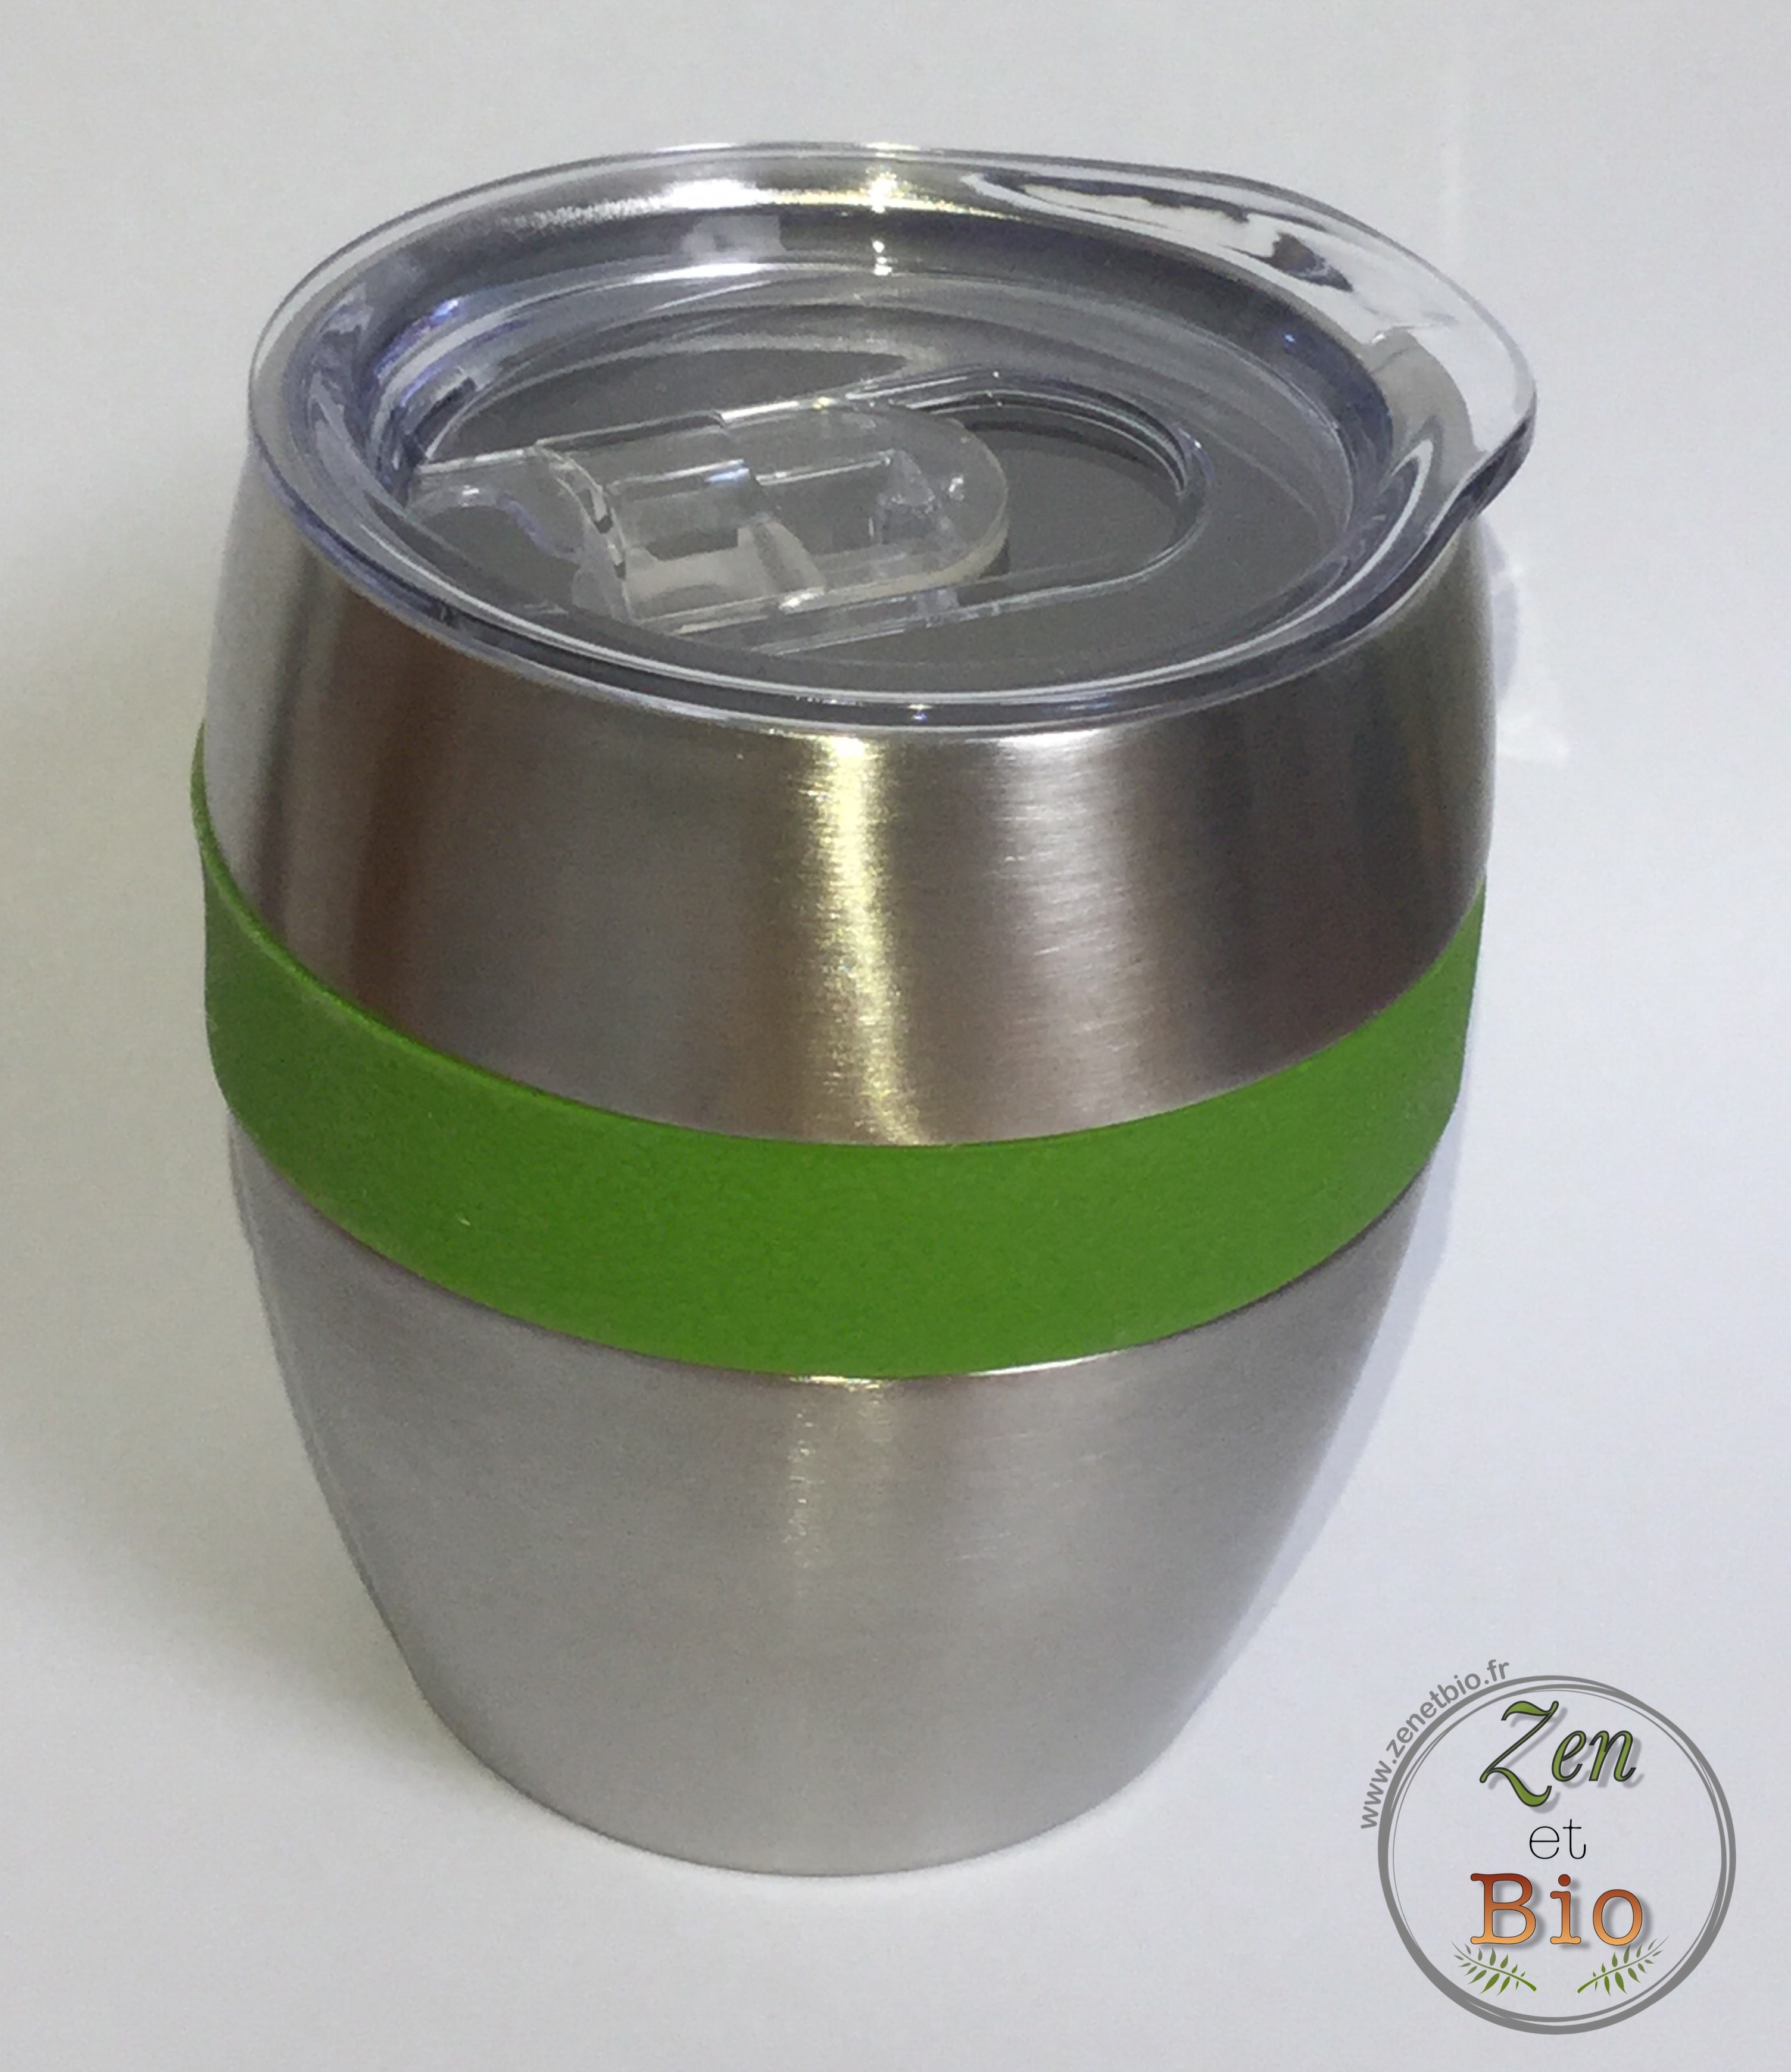 Gobelet inox Pliable sans BPA zéro déchet en acier inoxydable